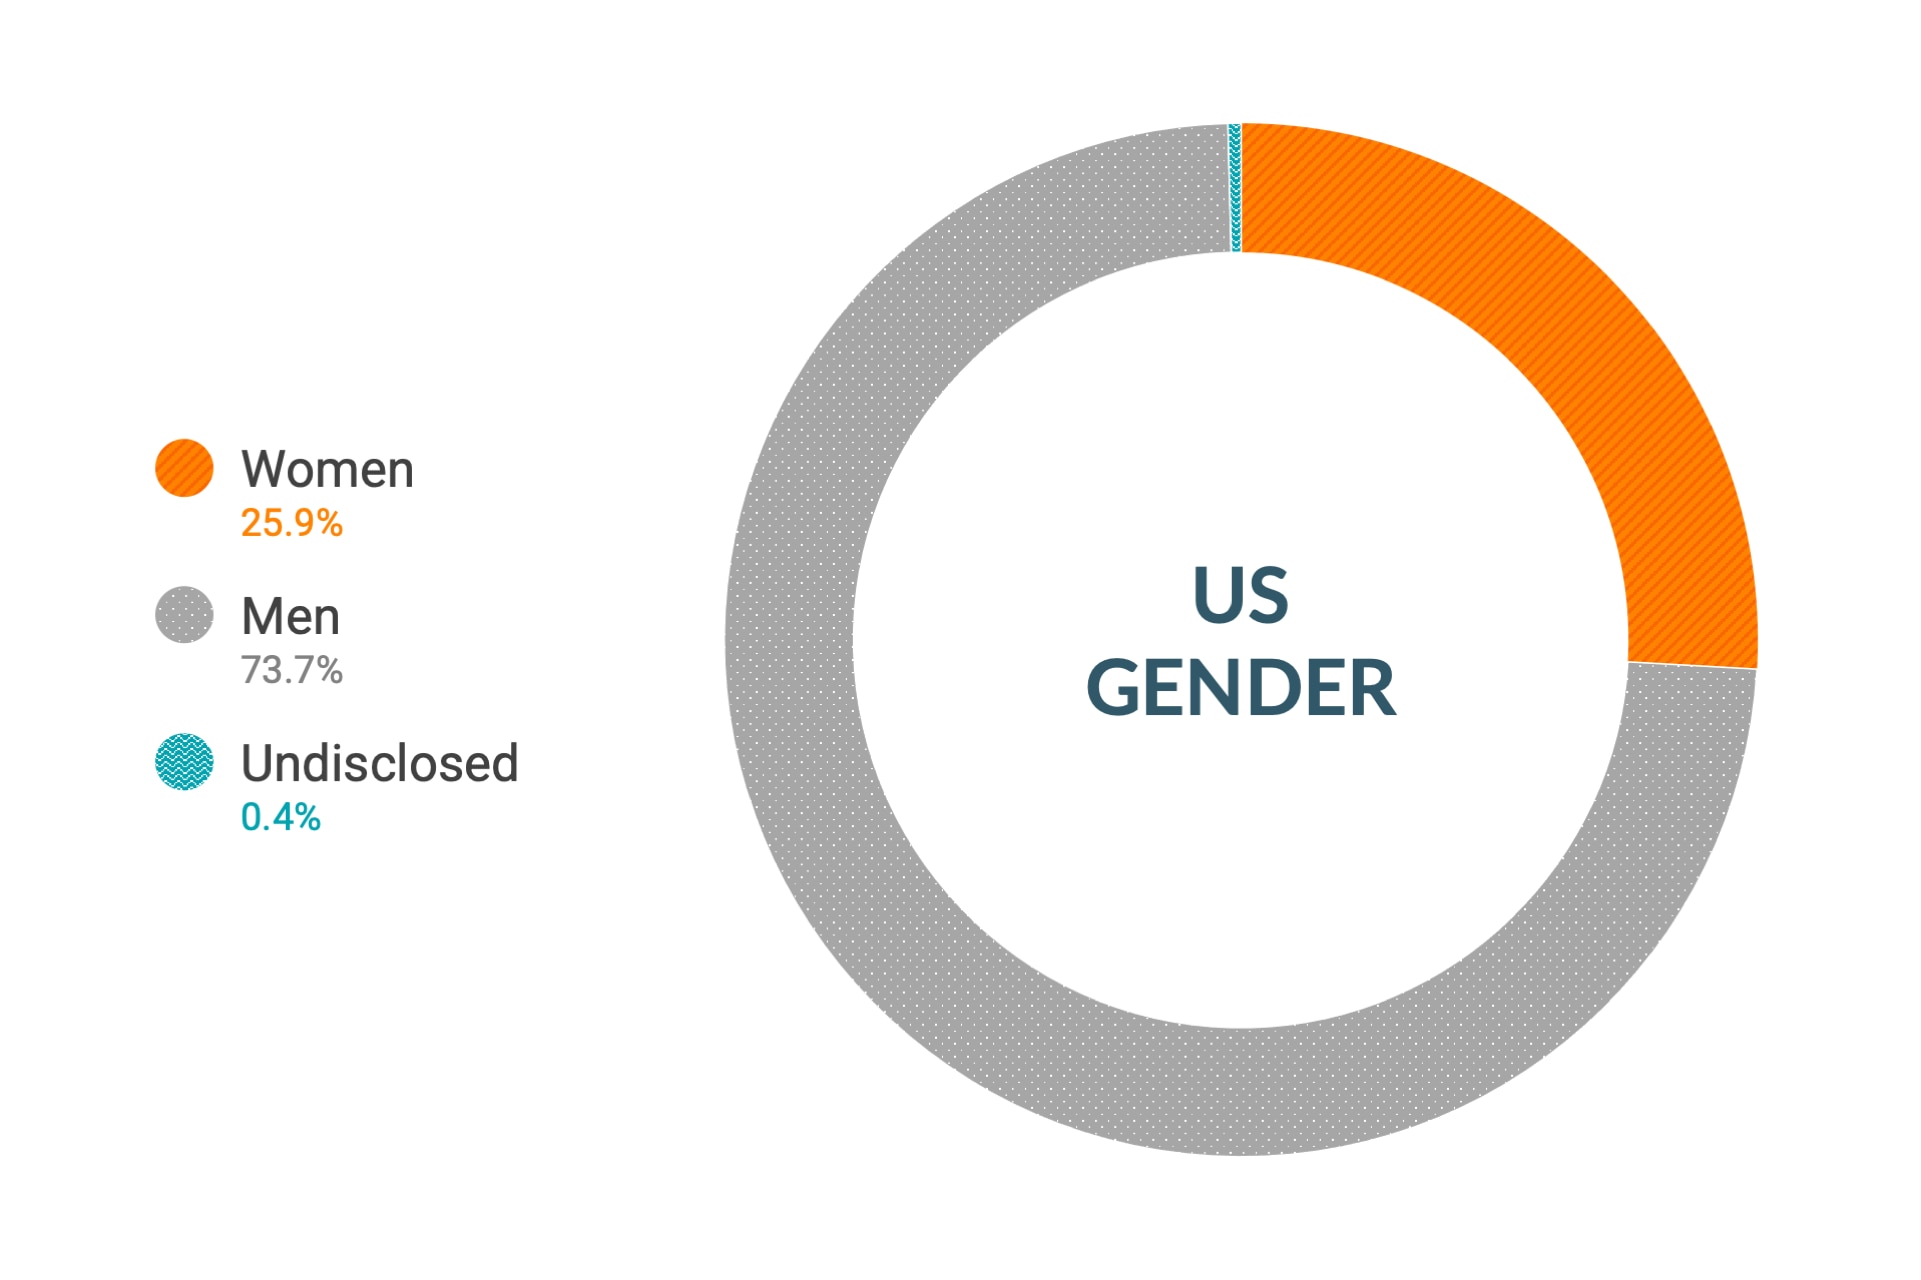 Cloudera のダイバーシティとインクルージョンデータ (米国の性別比): 女性26.6%、男性72.9%、回答なし0.5%